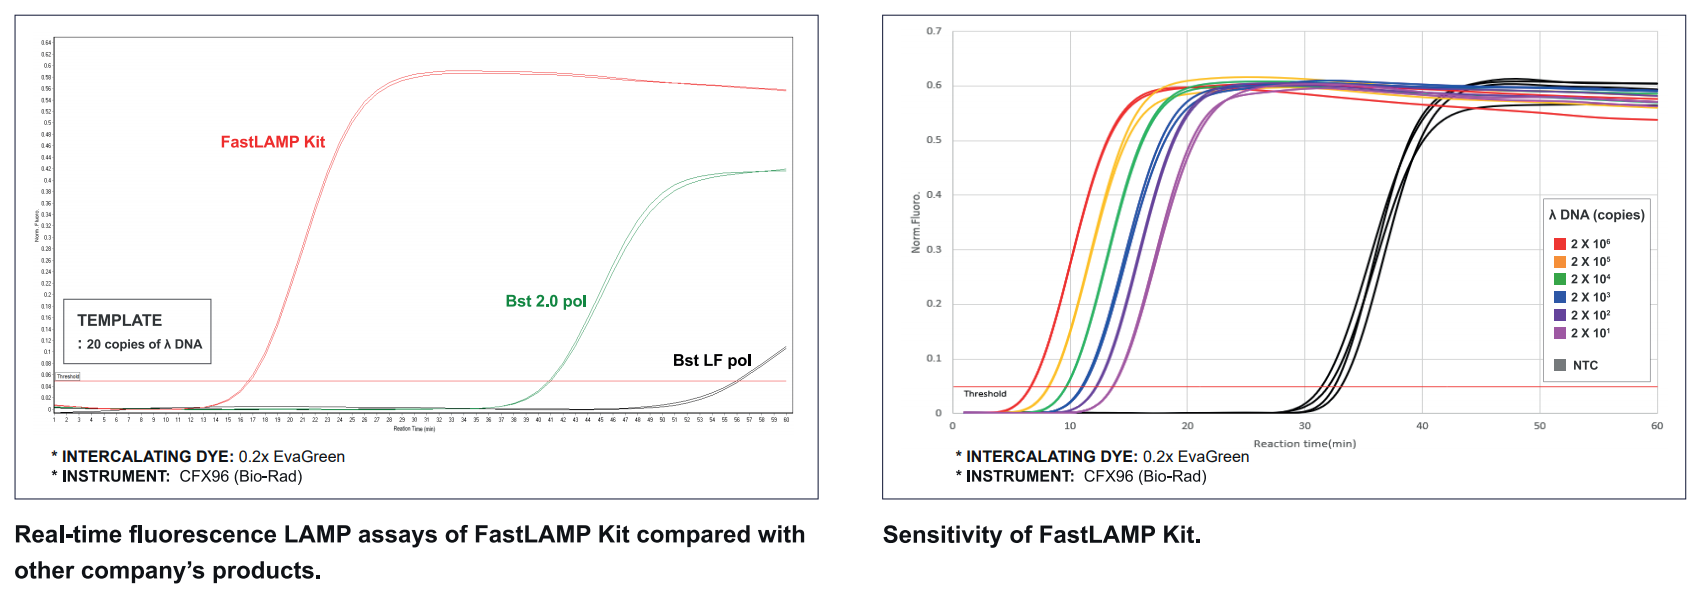 FLMP2_Figure. Real-time fluorescence LAMP assays of FastLAMP Kit